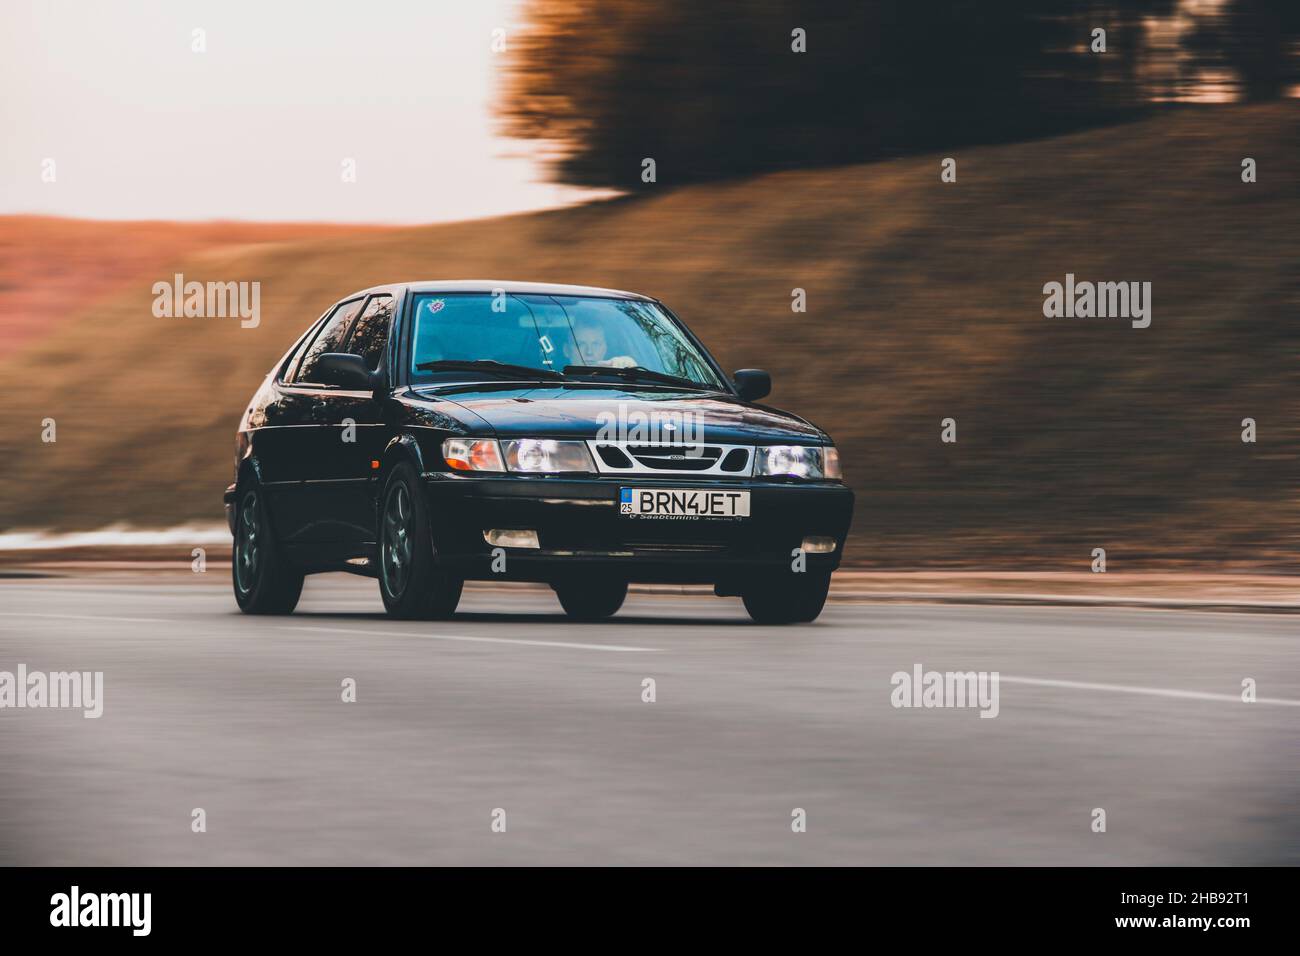 Chernigov, Ukraine - March 20, 2021: Old Swedish car Saab 900 Turbo on the road. Car in motion Stock Photo